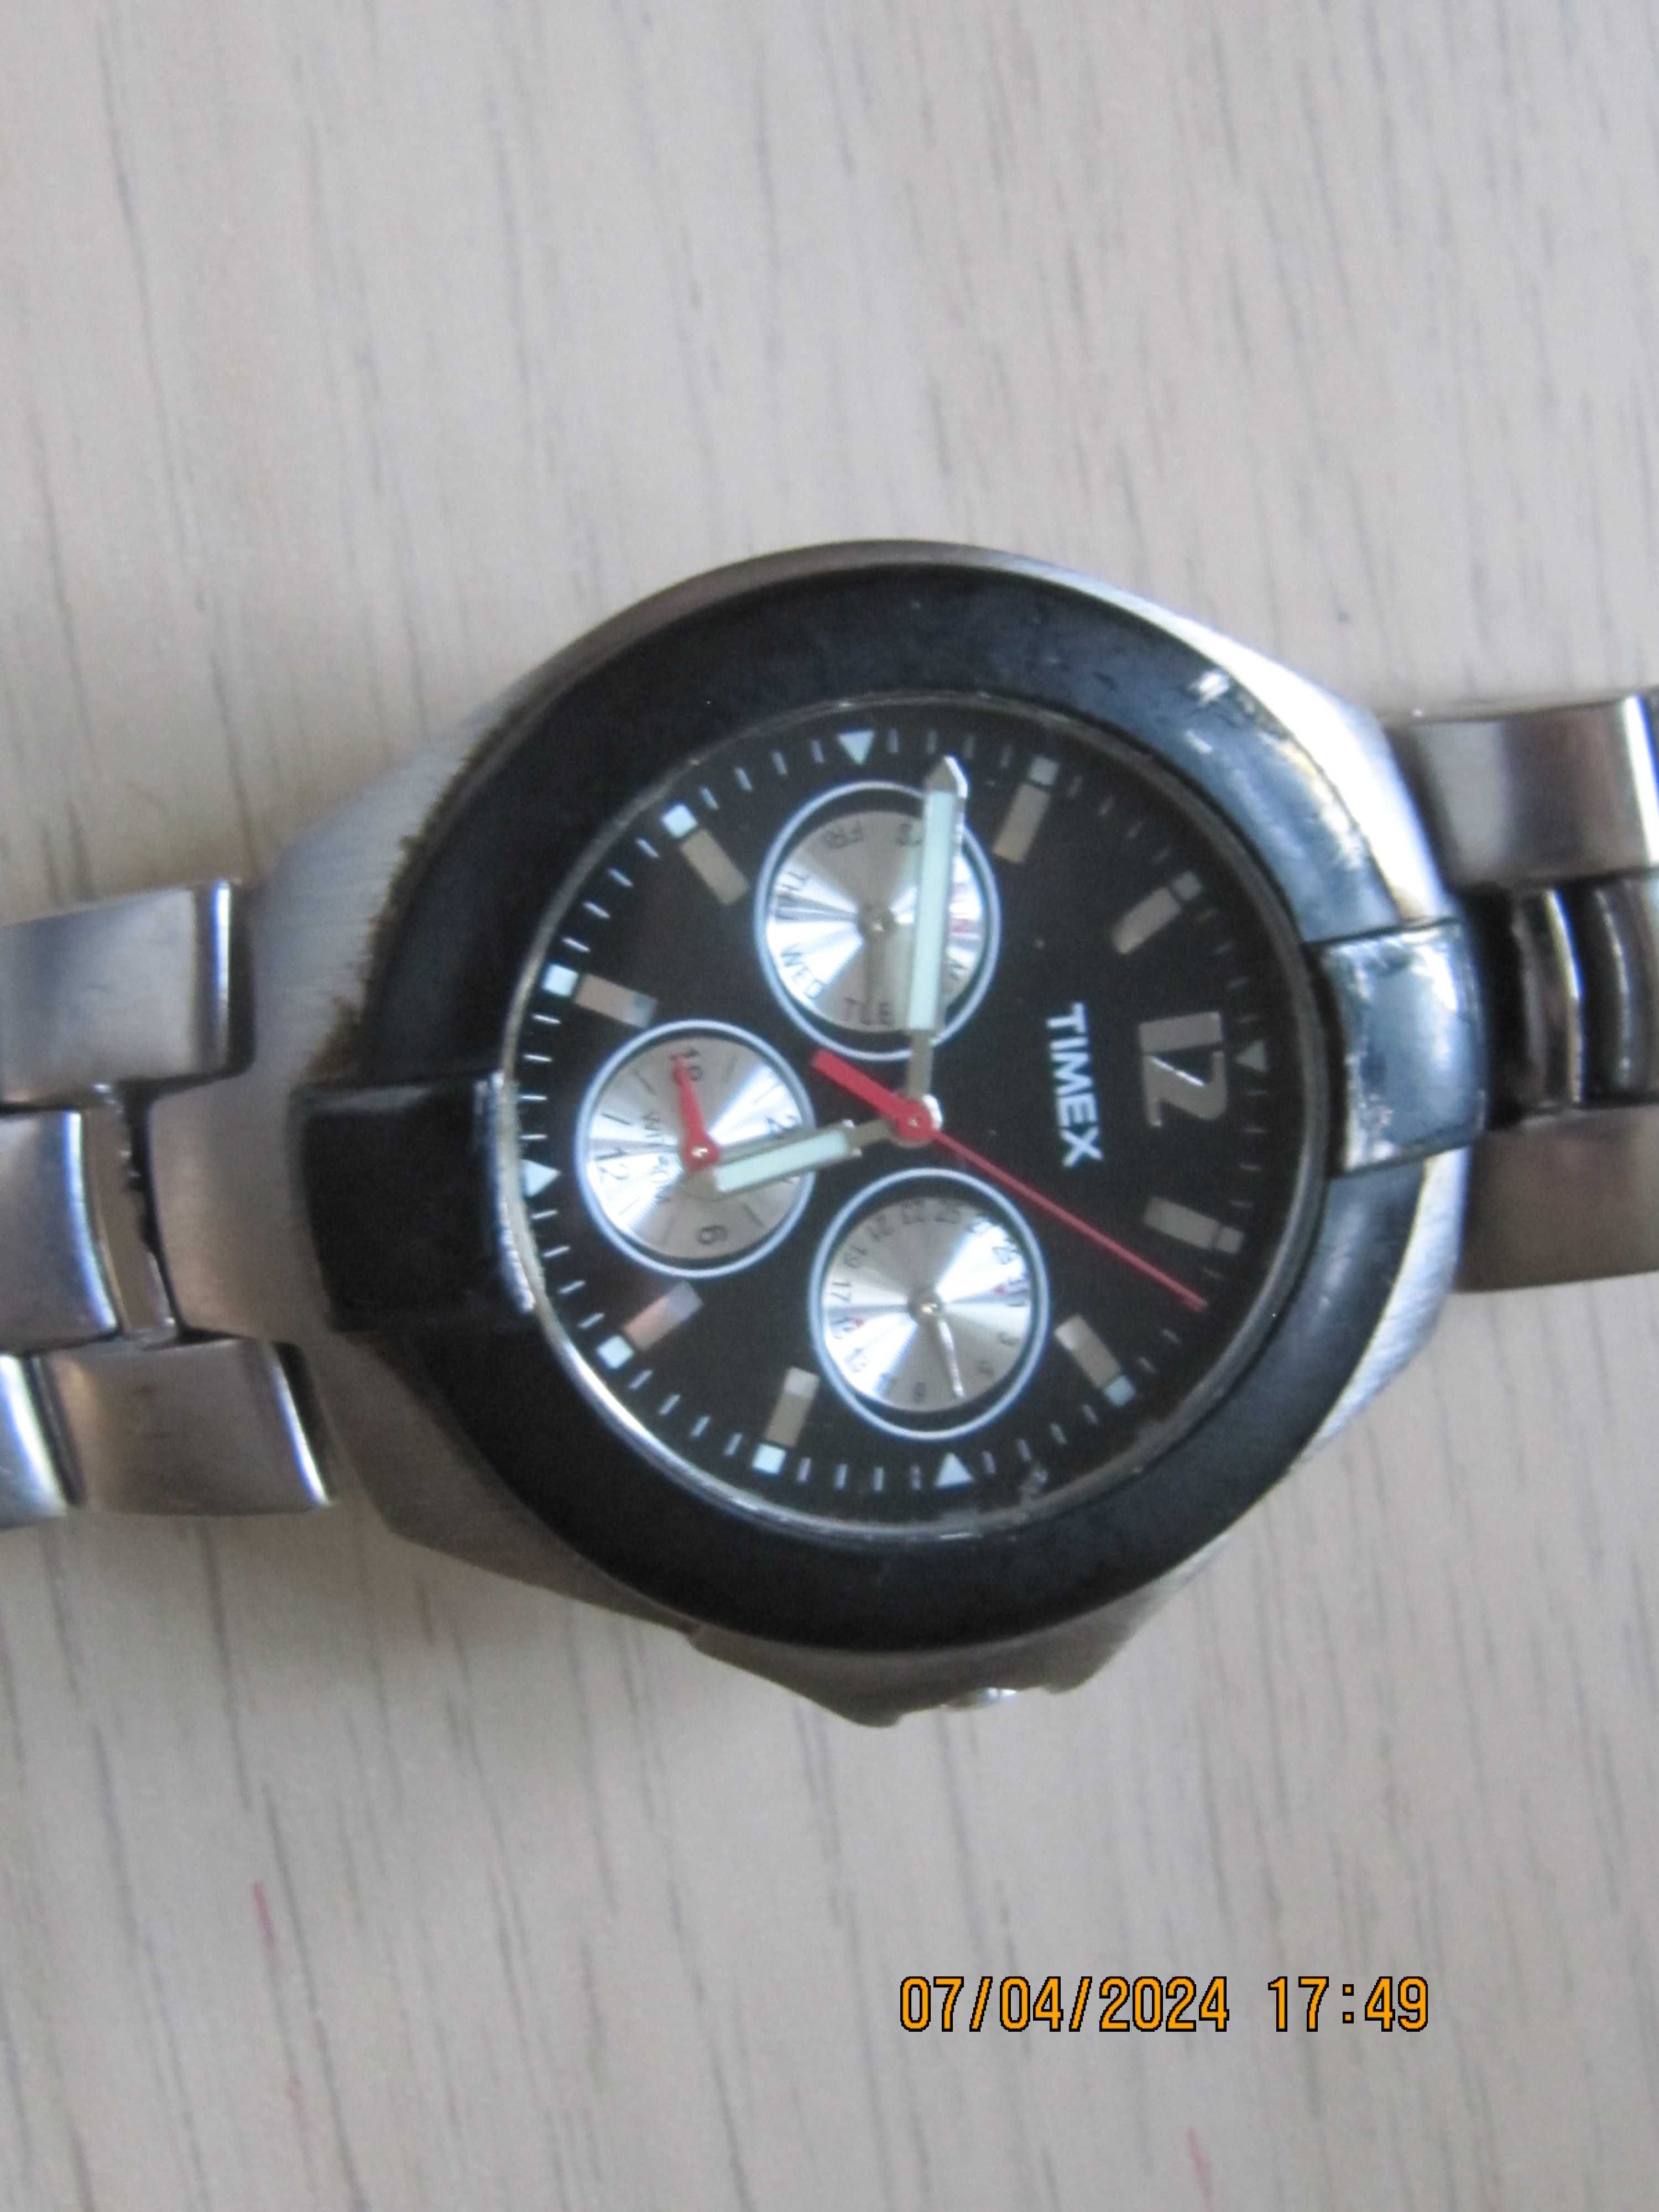 Timex multidata oryginalny sportowy zegarek